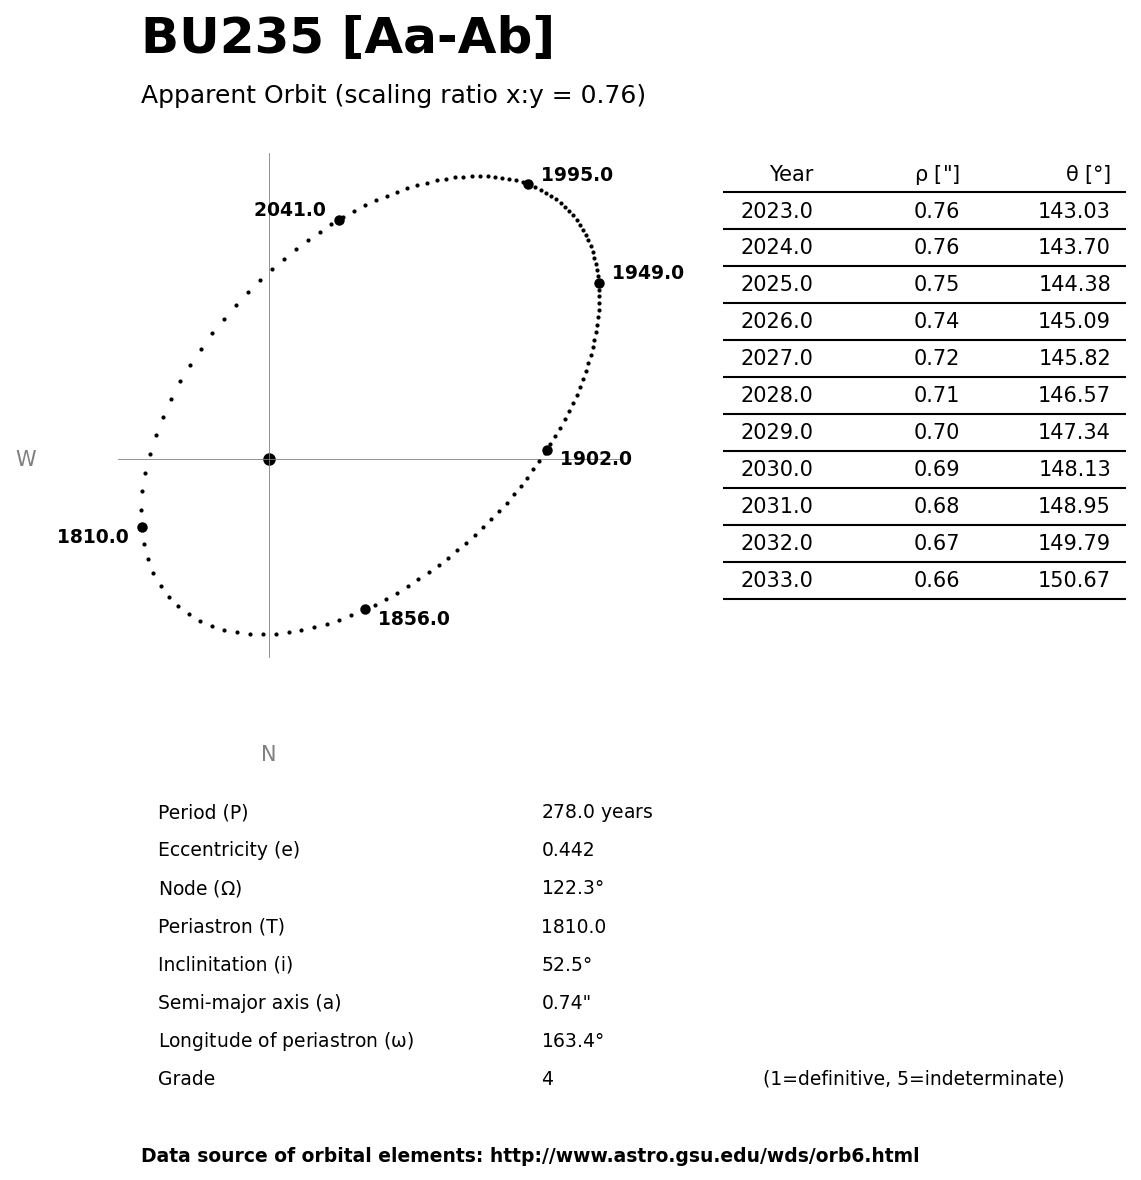 ../images/binary-star-orbits/BU235-Aa-Ab-orbit.jpg